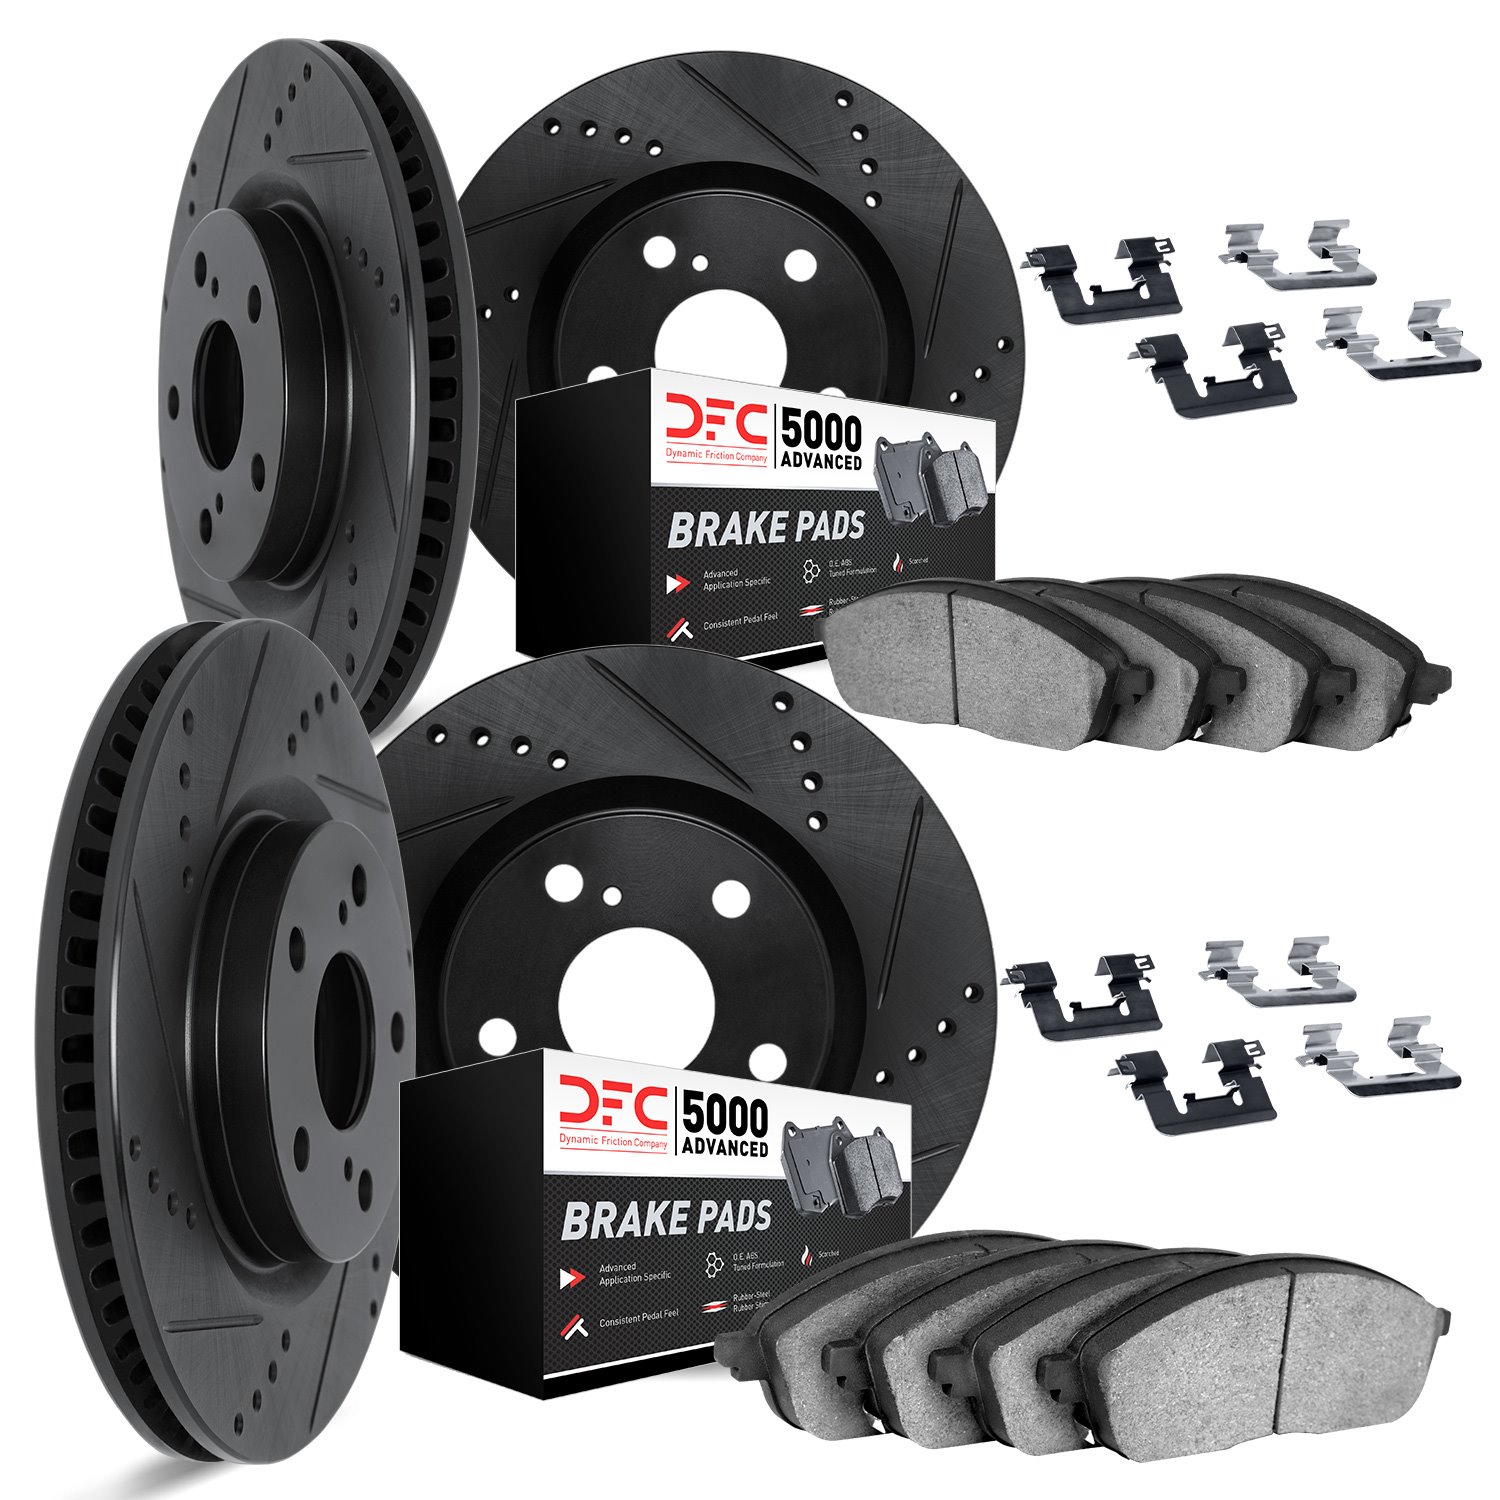 8514-13037 Drilled/Slotted Brake Rotors w/5000 Advanced Brake Pads Kit & Hardware [Black], 2006-2014 Subaru, Position: Front and